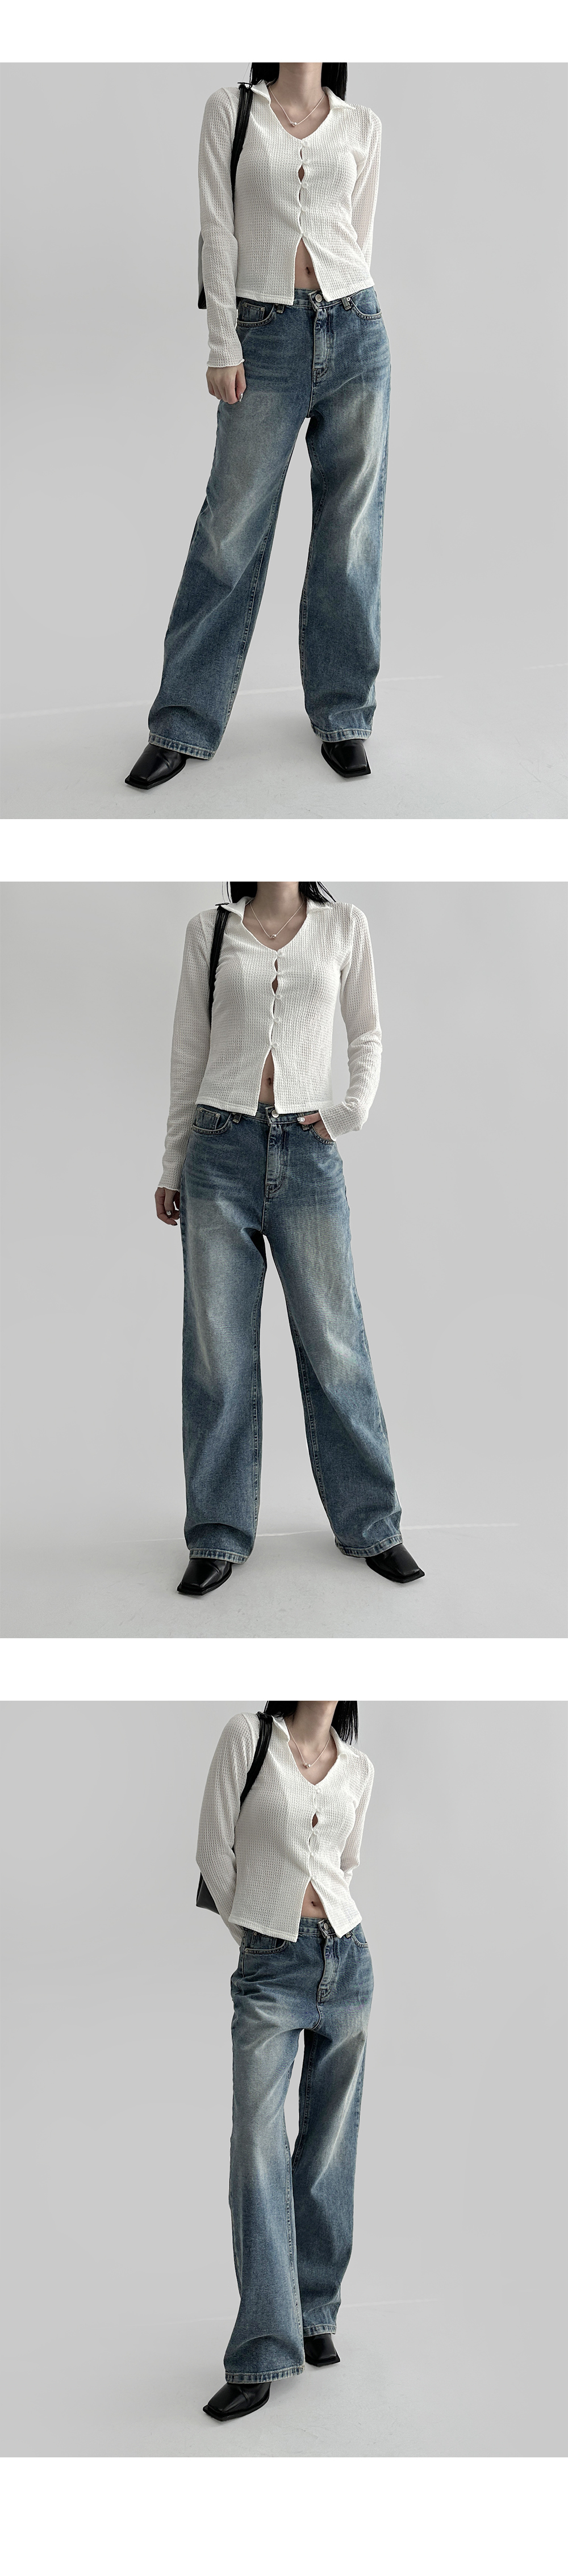 suspenders skirt/pants white color image-S1L6